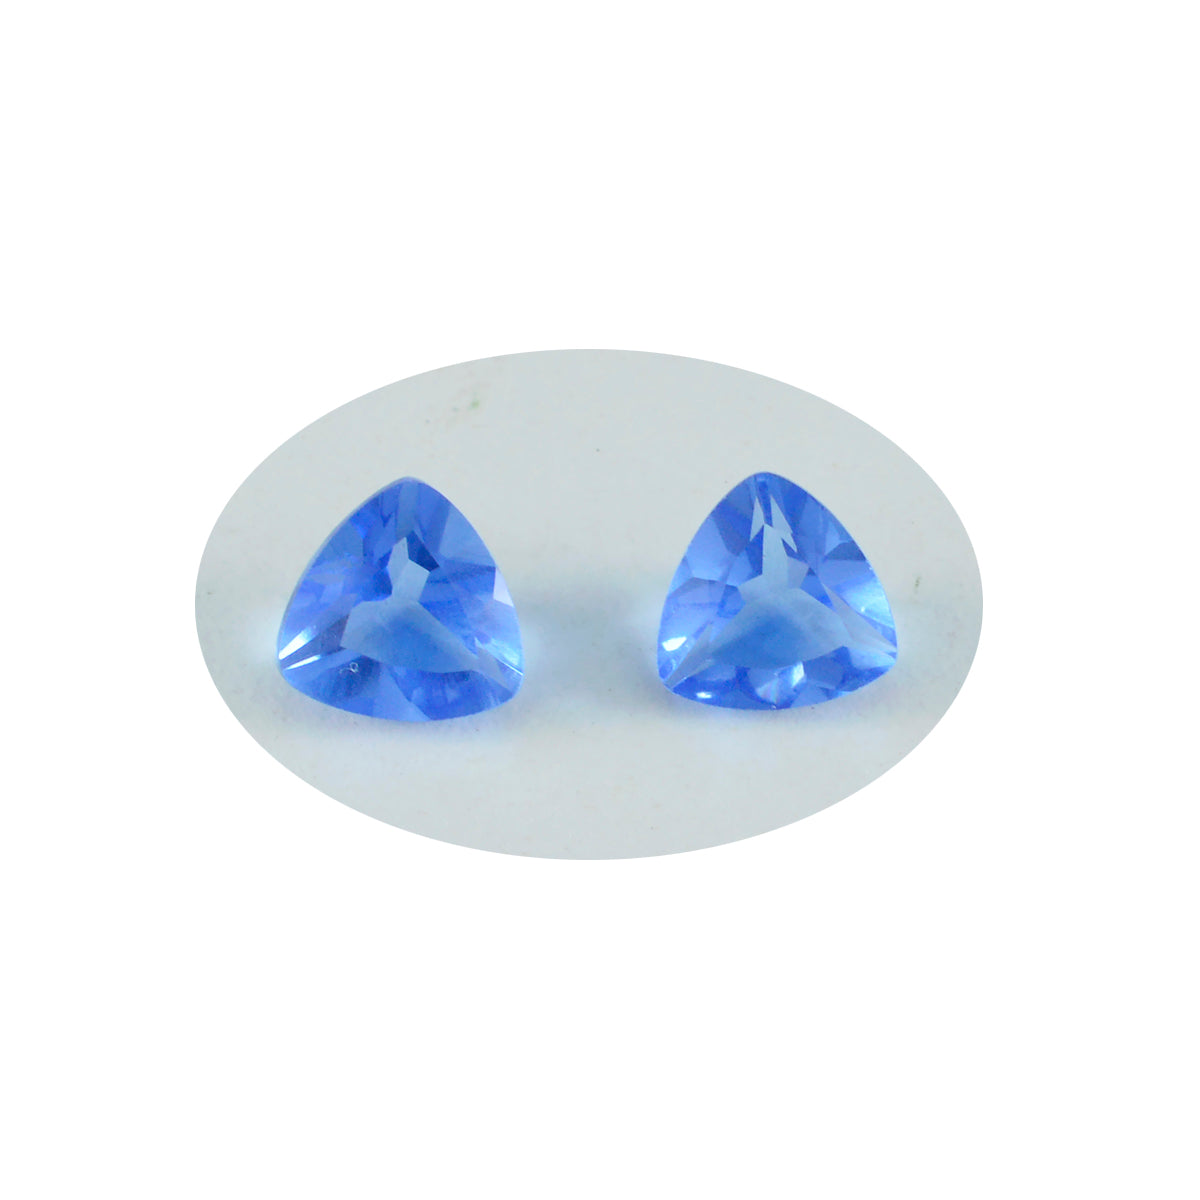 Riyogems 1PC Blue Sapphire CZ Faceted 11x11 mm Trillion Shape awesome Quality Stone